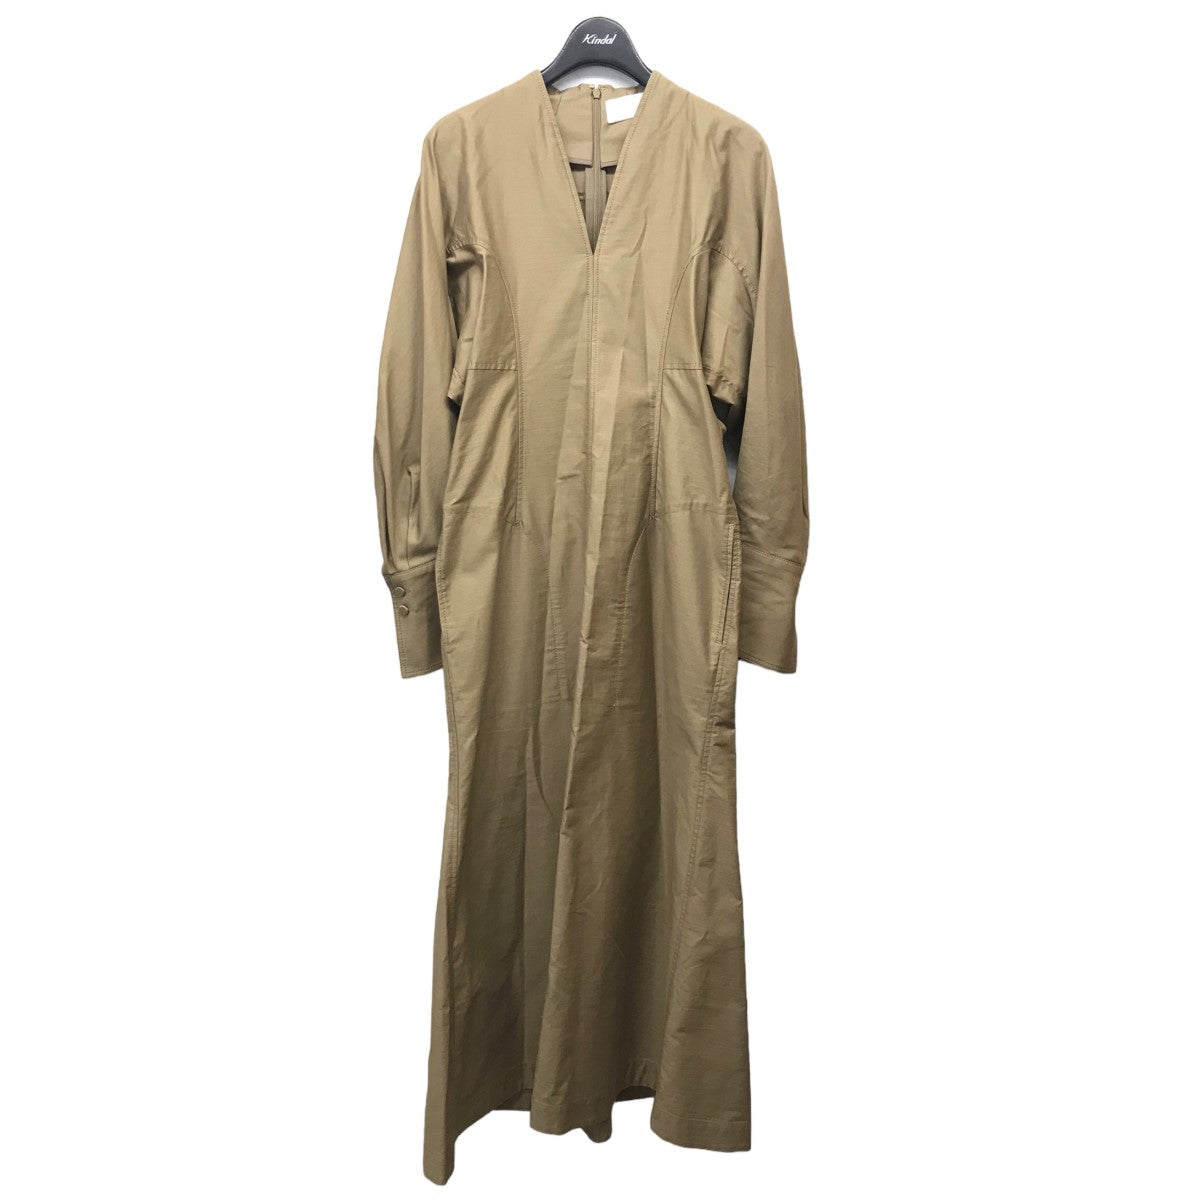 Mame kurogouchi(マメクロゴウチ) 「Military Cotton Deep Neck Dress」 ミリタリーコットンディープネックドレス MM22PS-DR712 ベージュ サイズ:2 レディース ワンピース 中古・古着